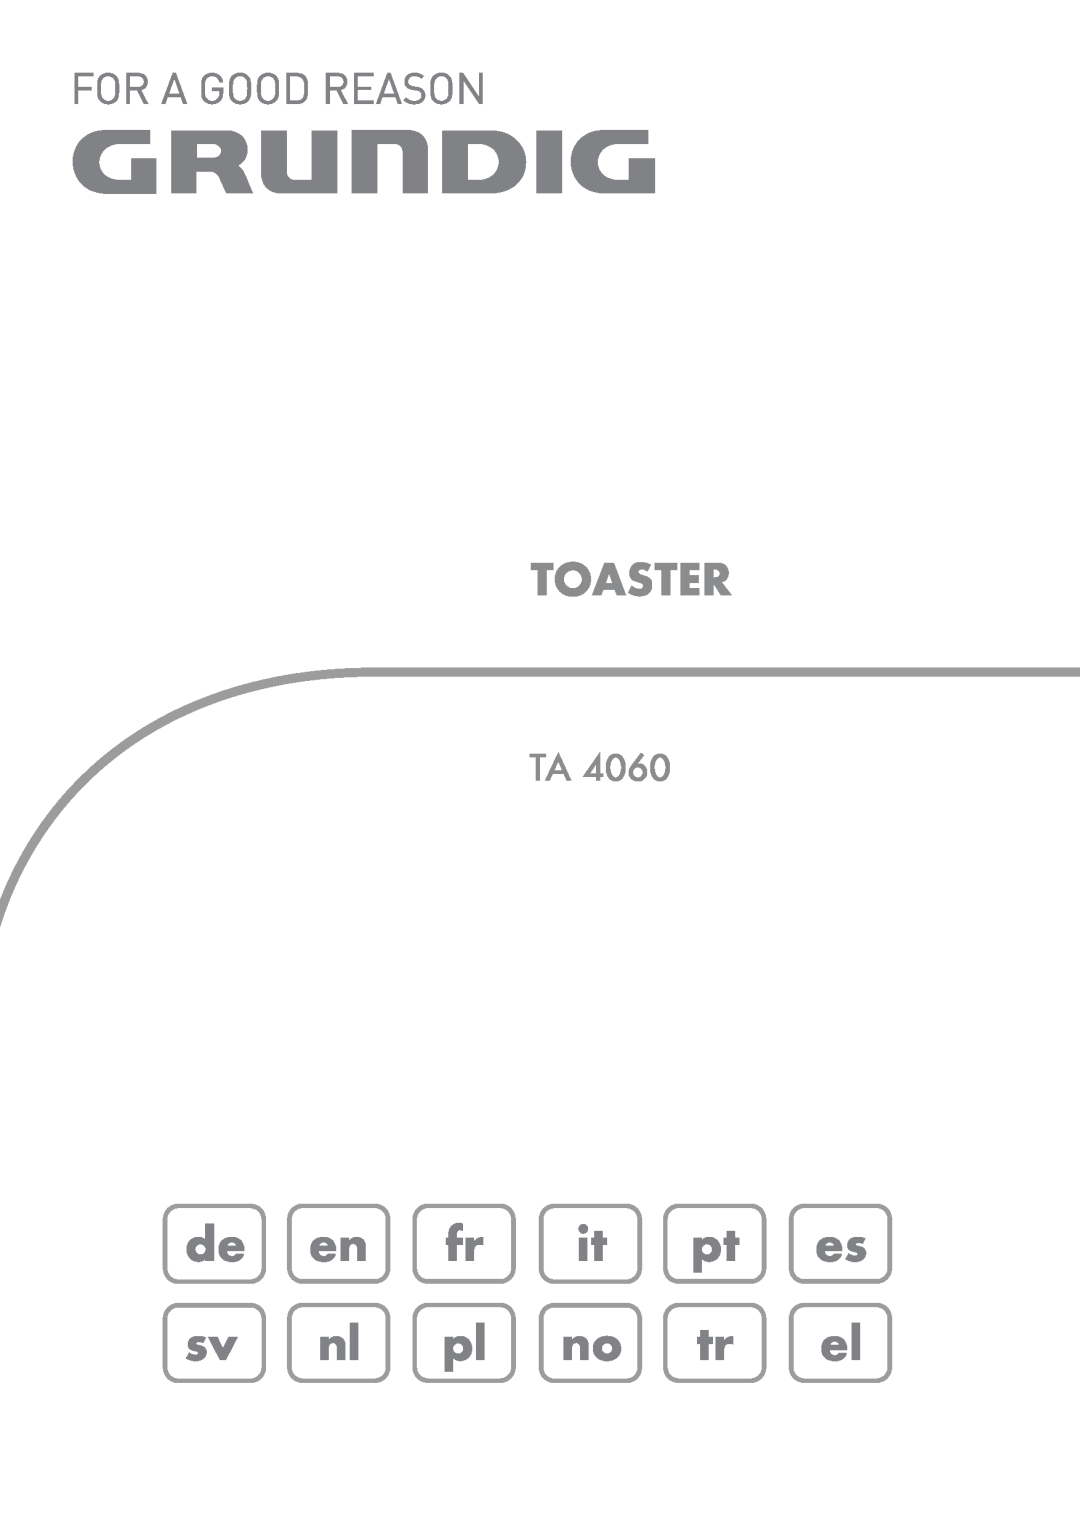 Grundig TA 4060 manual de en fr it pt es sv nl pl no tr el, Toaster 